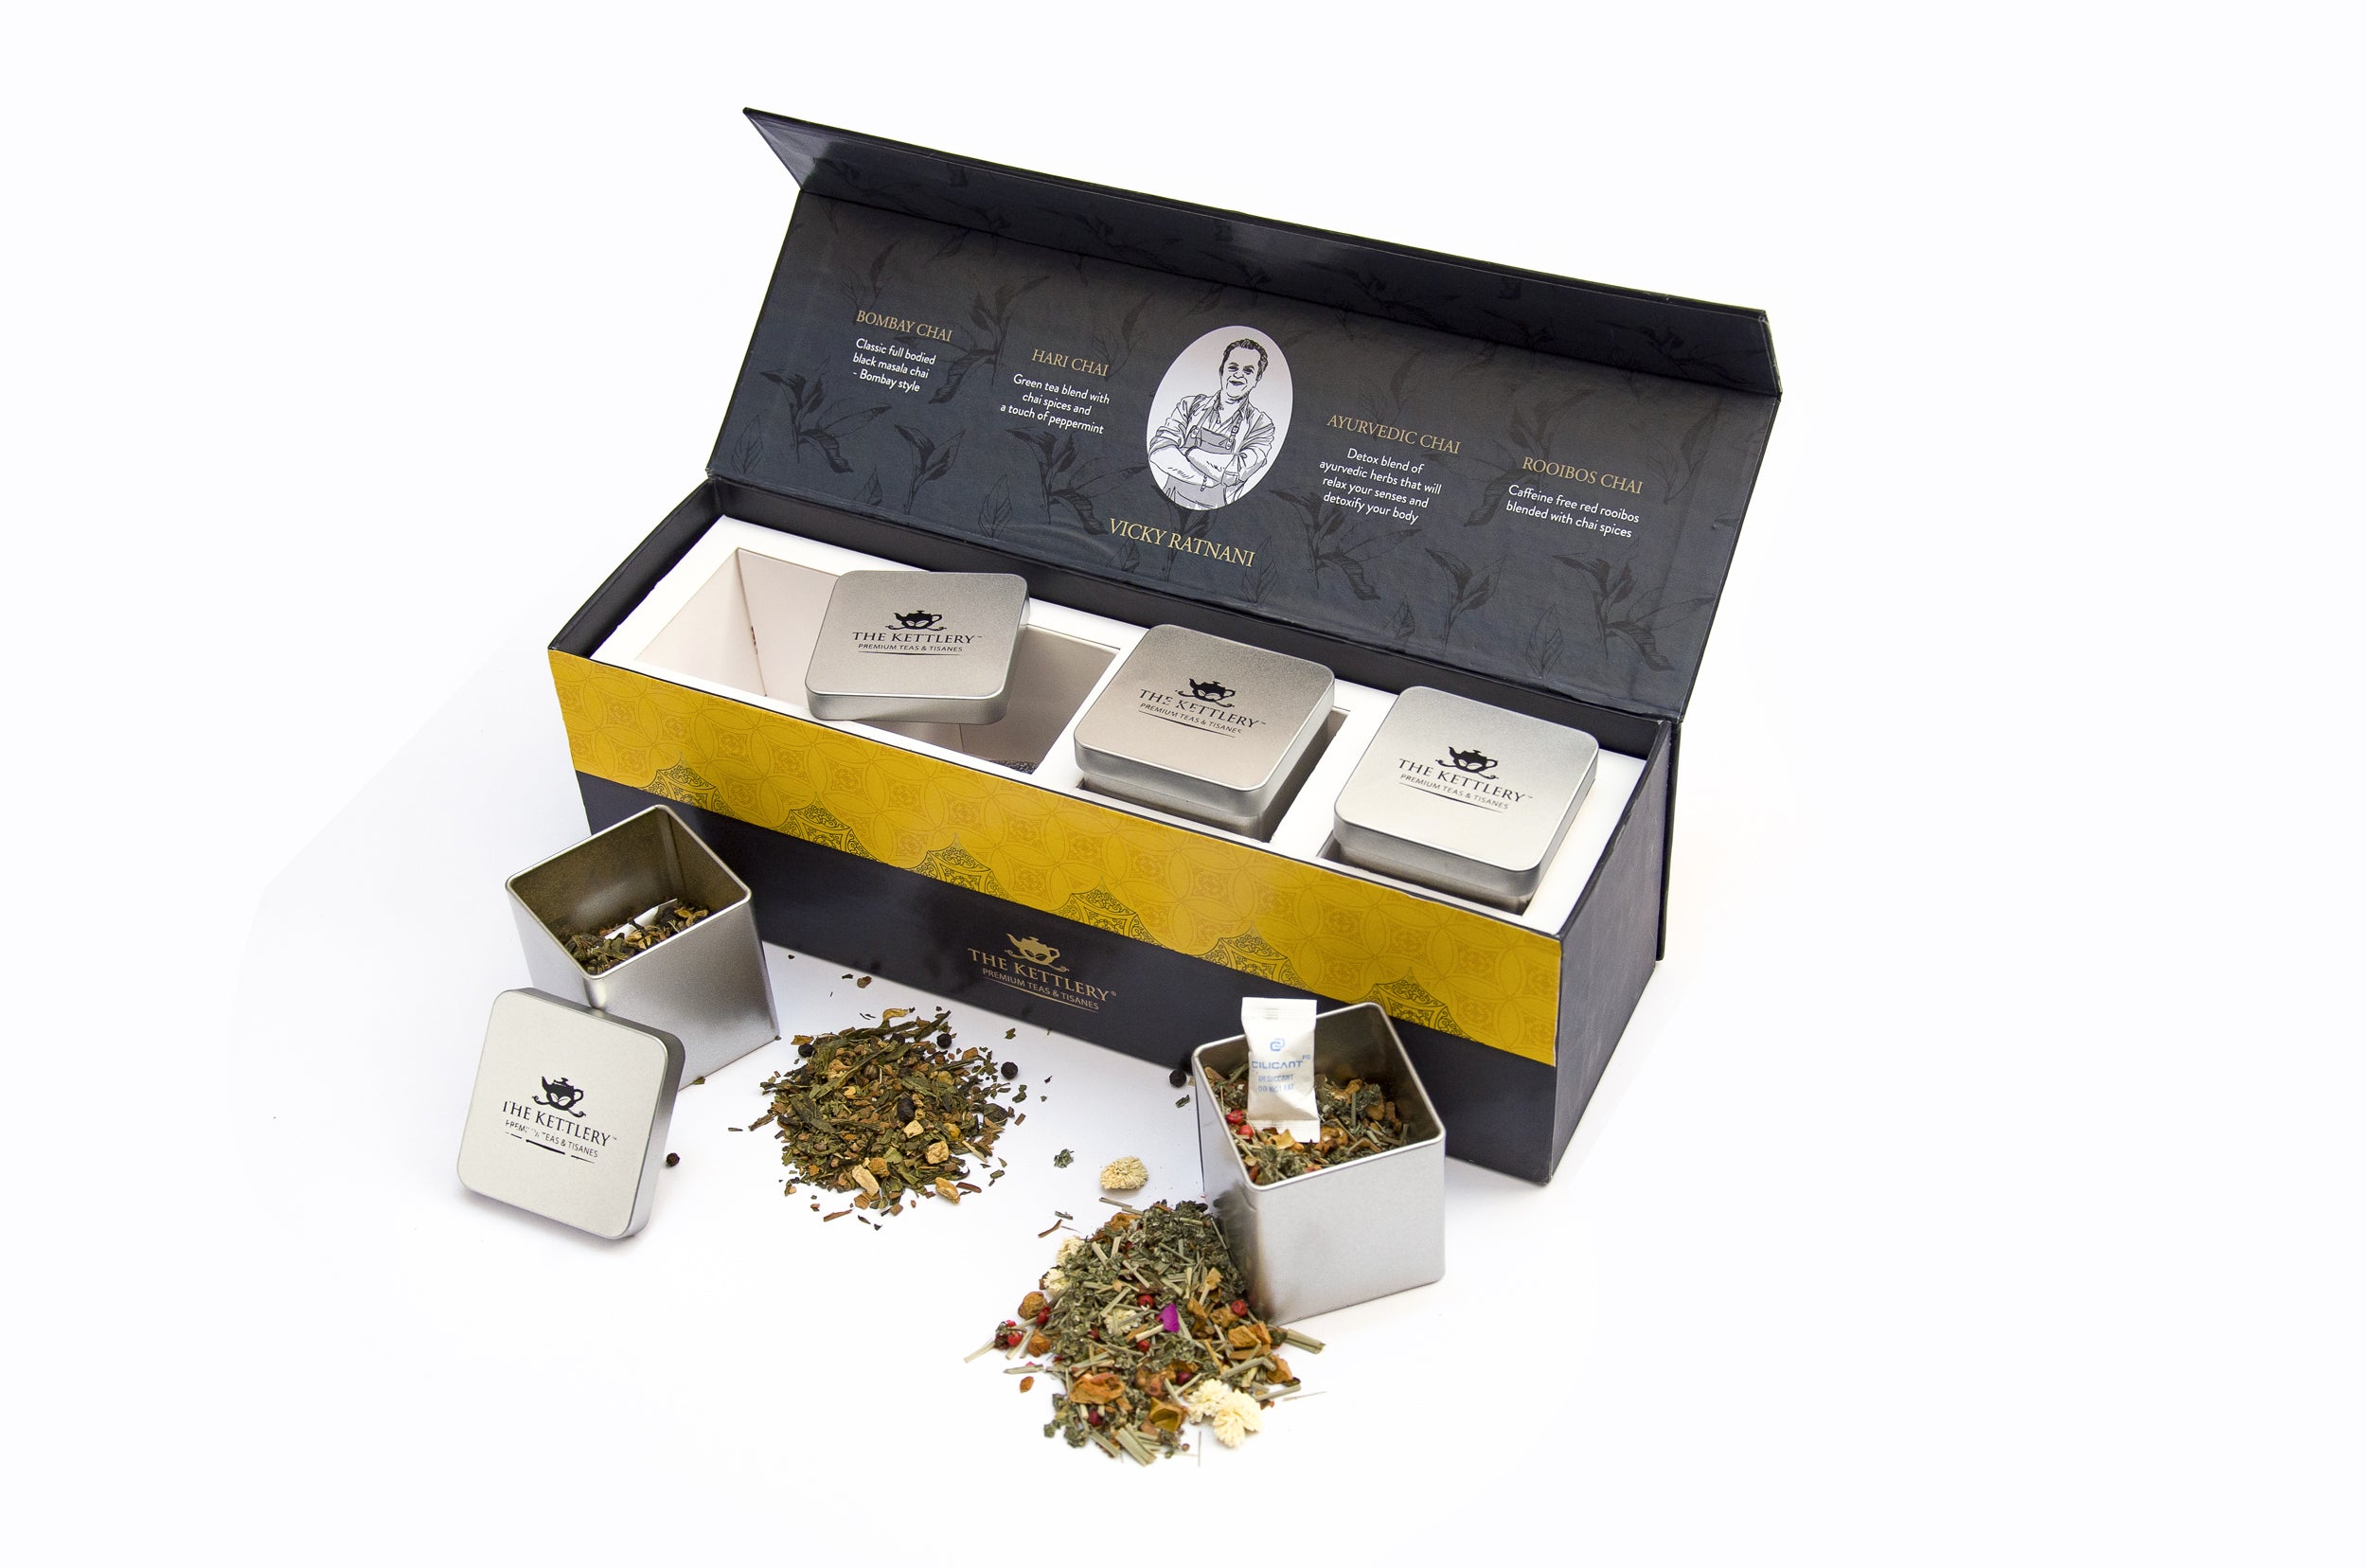 The Kettlery Spice Of Life Tea Set with 4 Chai Tea Flavours | Premium Tea Gift Box | Masala Chai Tea | Ayurvedic Chai Tea | Green Chai Tea | Red Chai Tea | Tea Gifts